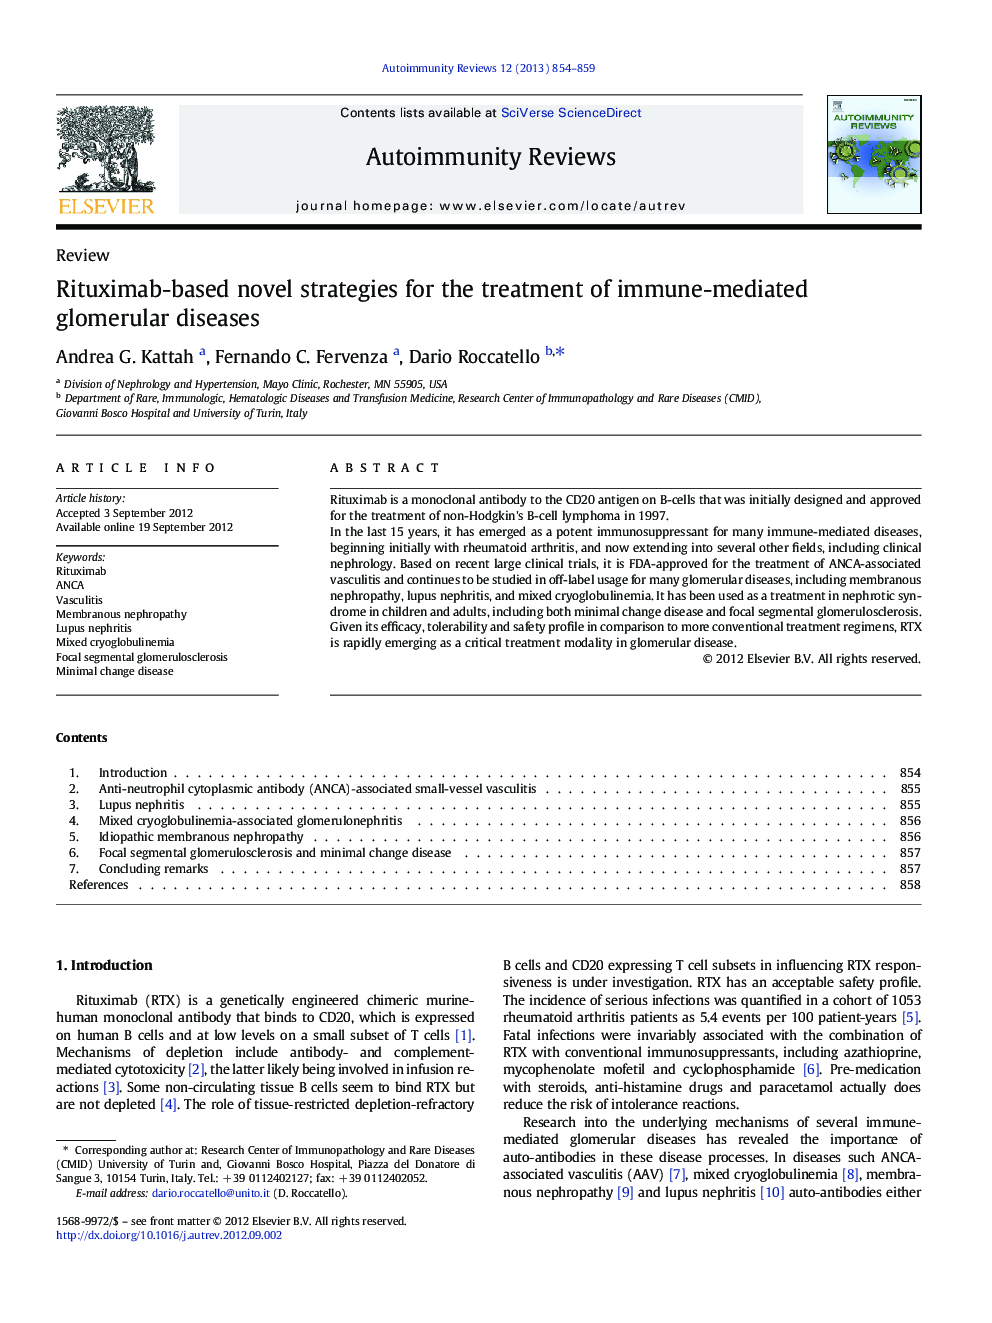 Rituximab-based novel strategies for the treatment of immune-mediated glomerular diseases